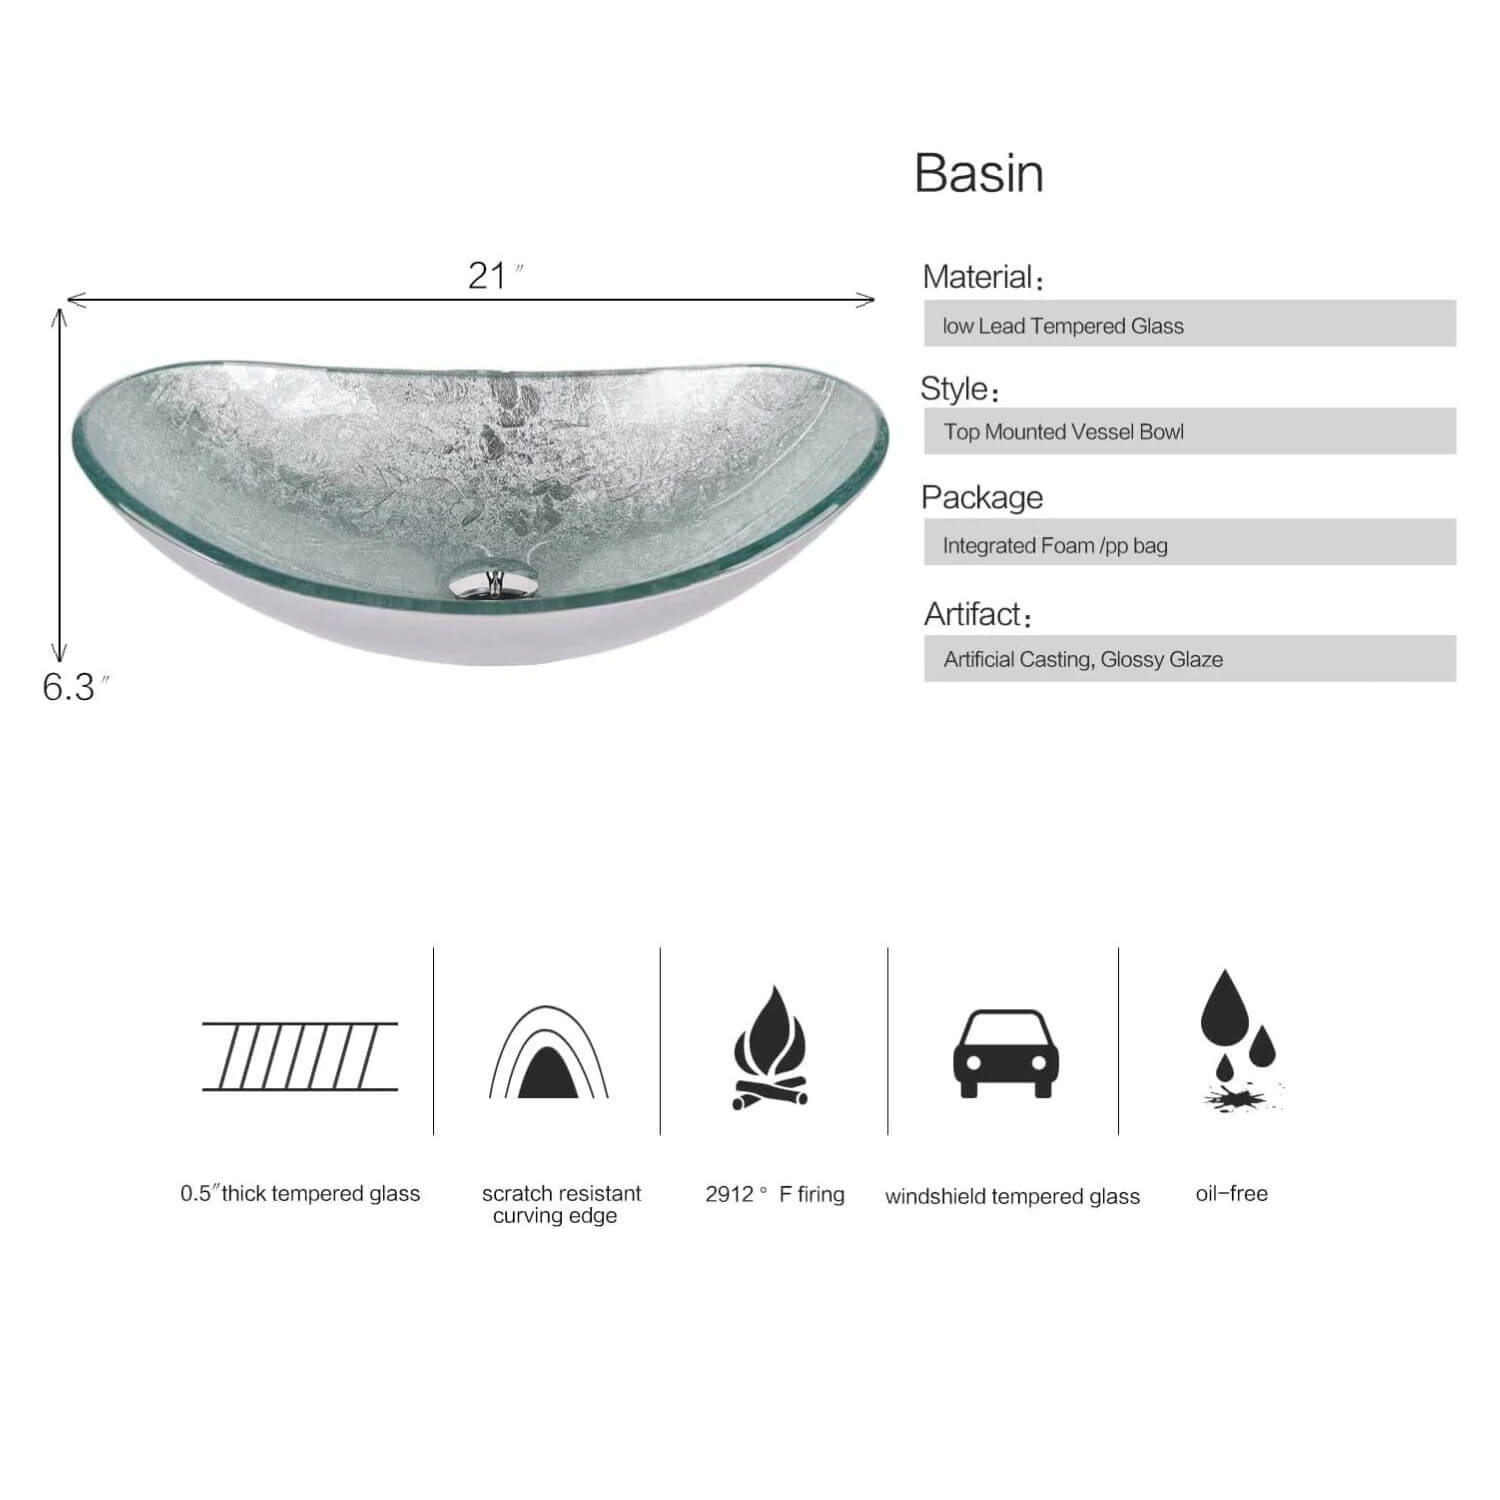 Description of elecwish silver boat glass sink